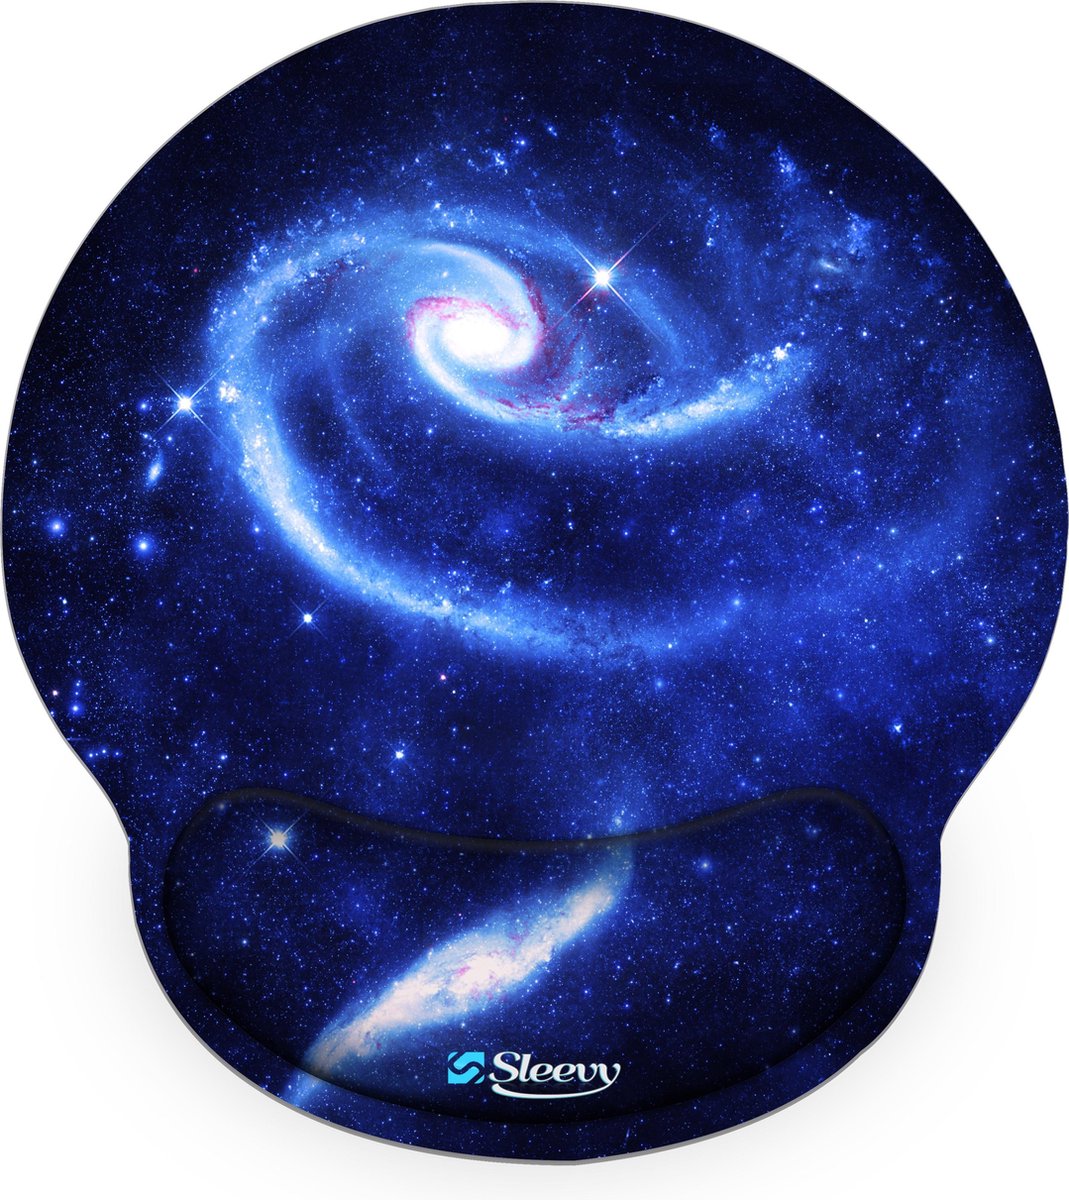 Muismat polssteun universum - Sleevy - mousepad - Collectie 100+ designs